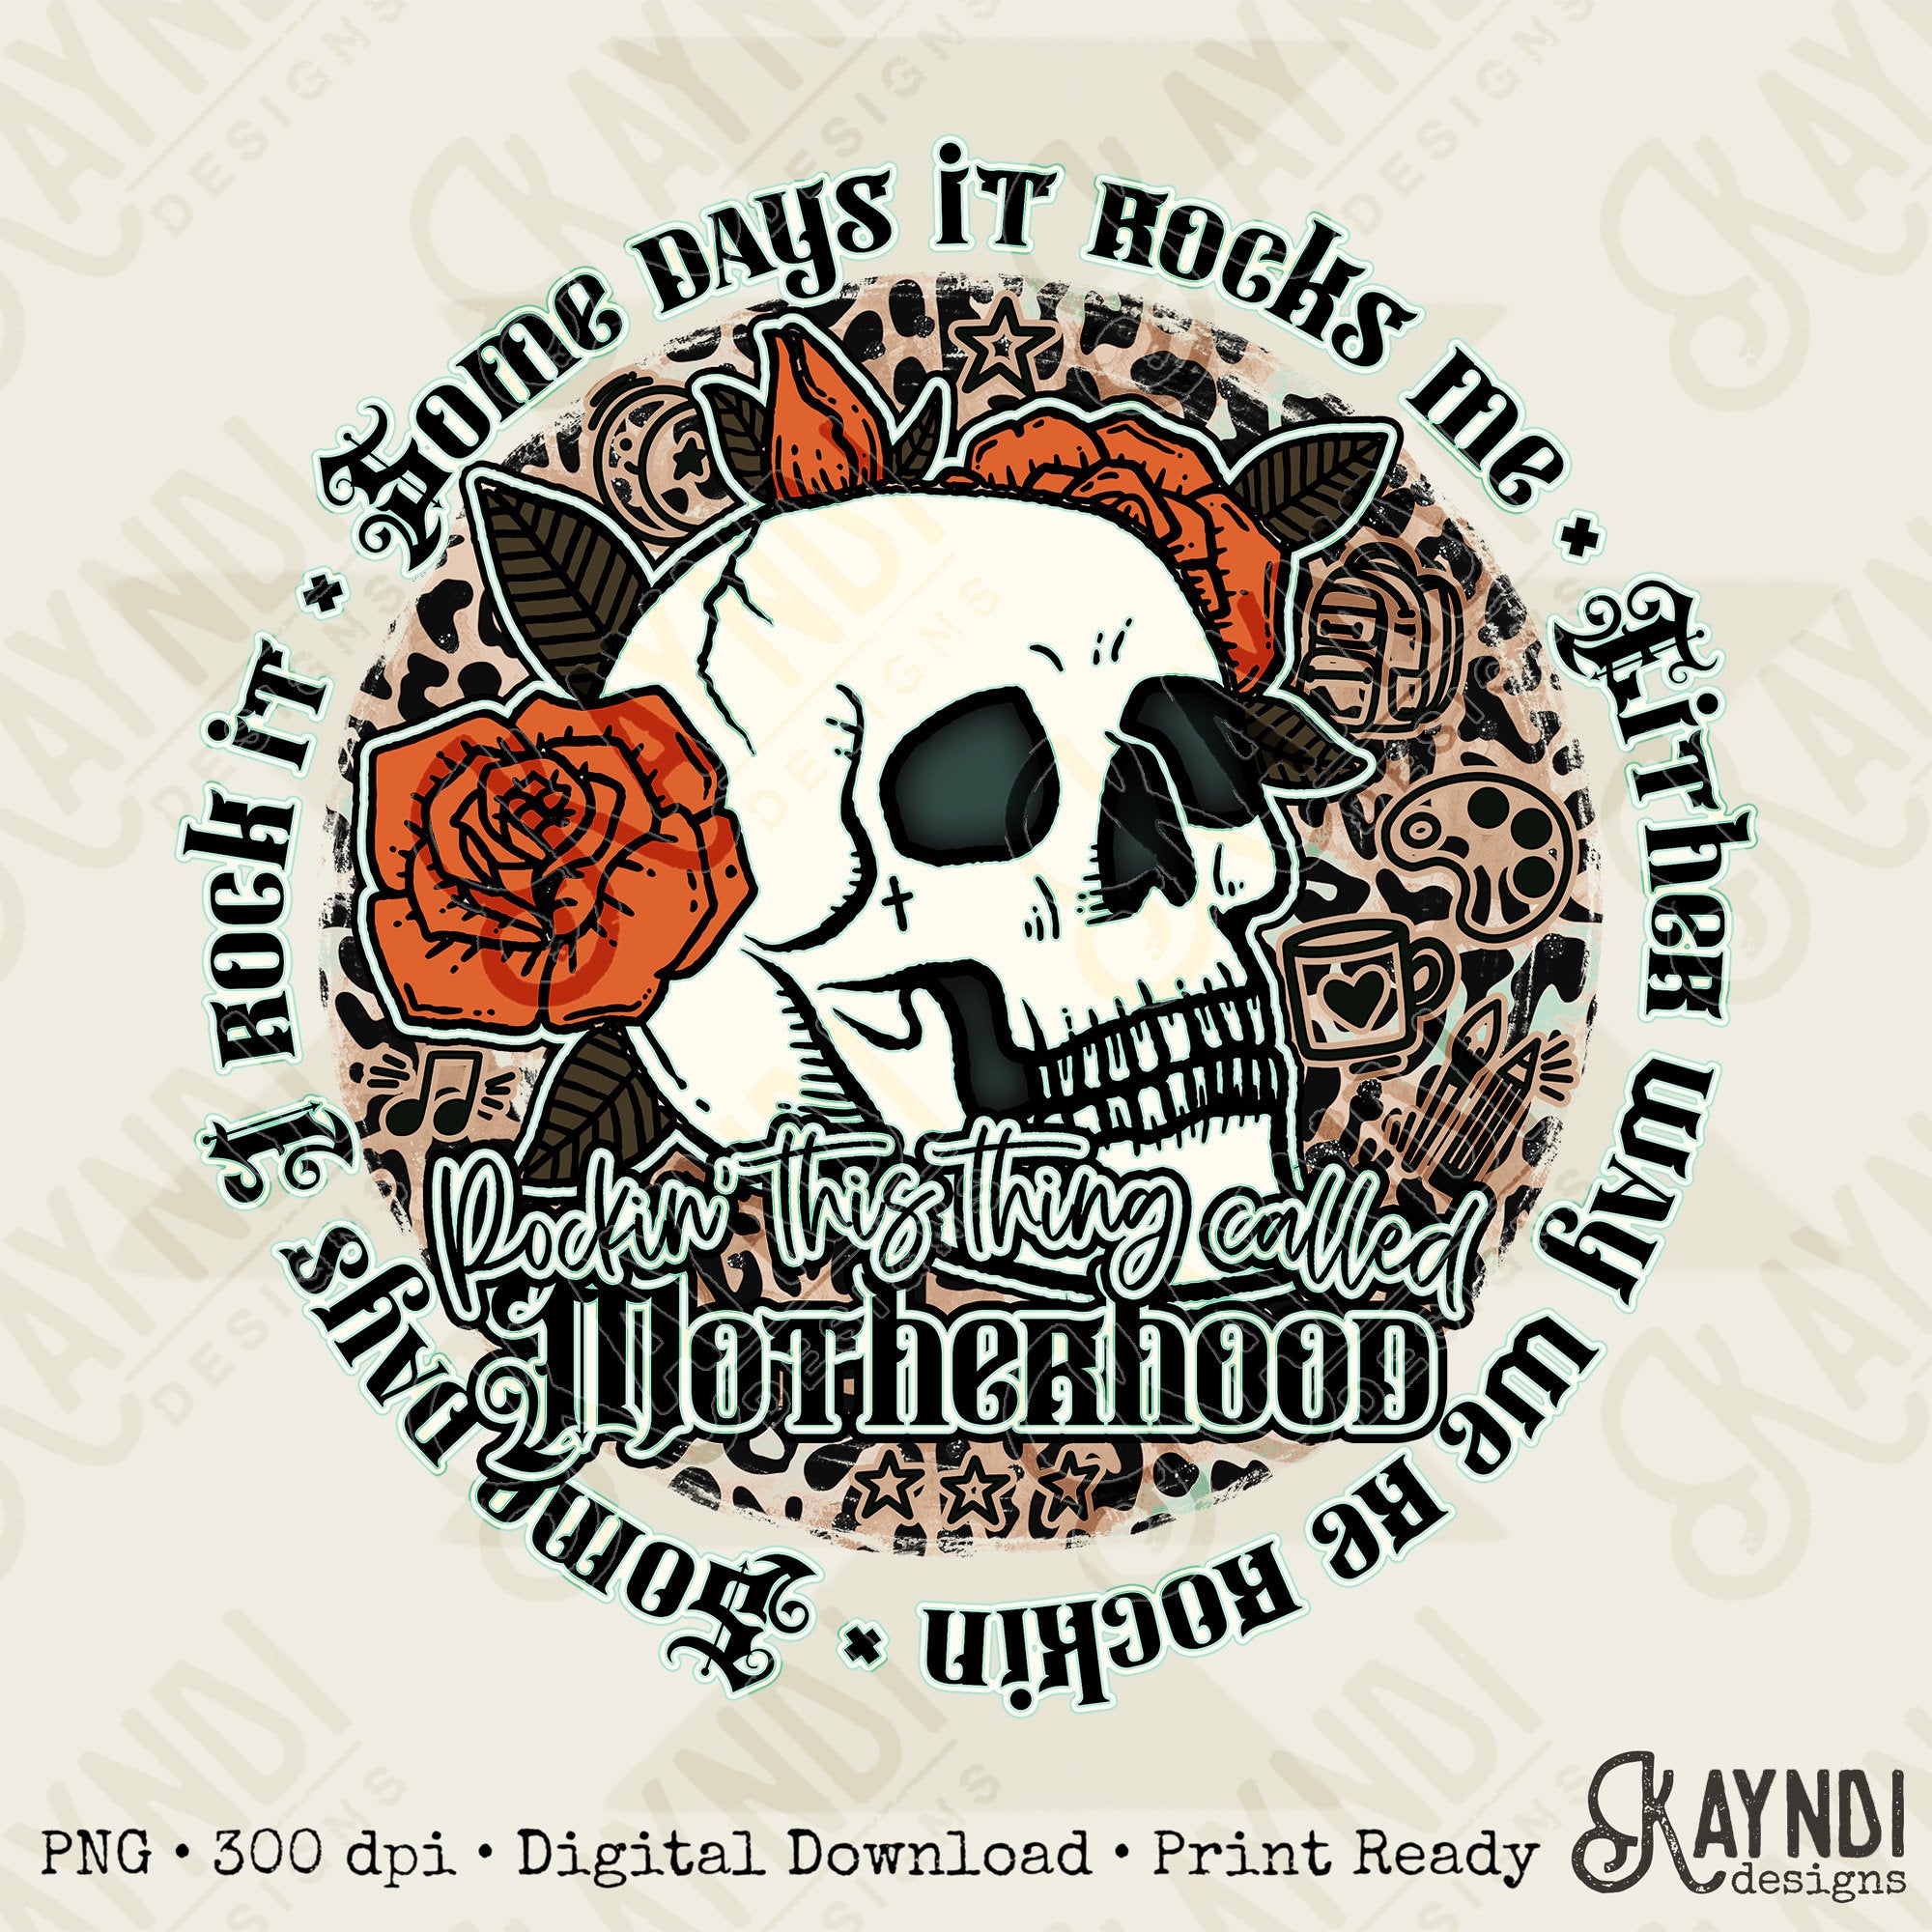 Rockin This Thing Called Motherhood Sublimation Design PNG Digital Download Printable Skull Rose Tattoo Leopard Grunge Rock Skeleton